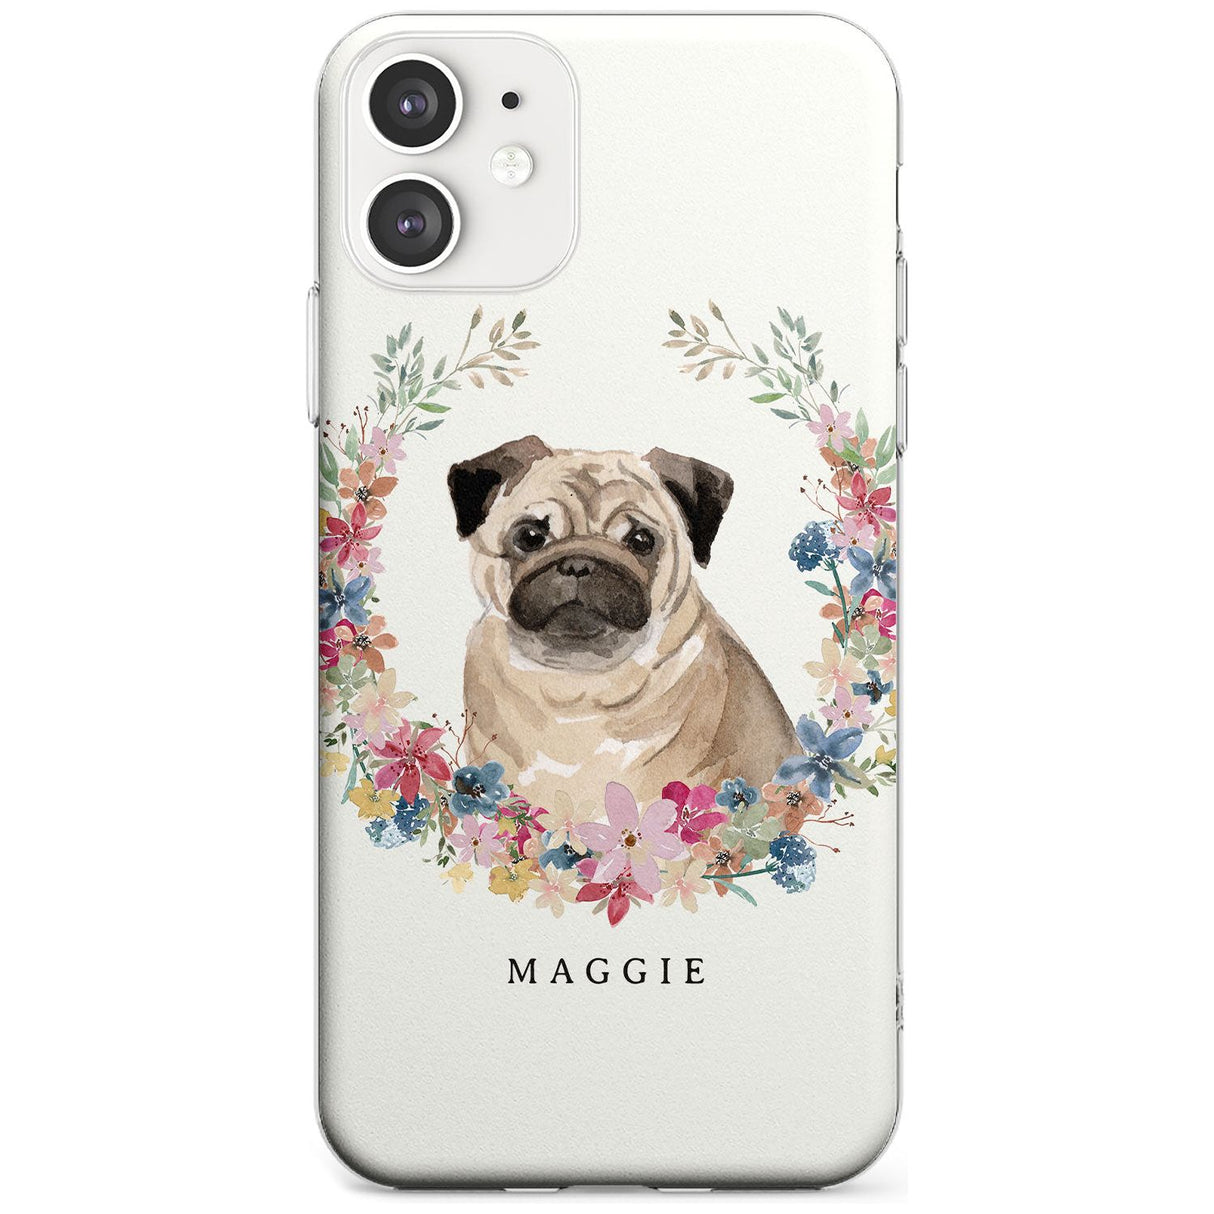 Pug - Watercolour Dog Portrait Slim TPU Phone Case for iPhone 11